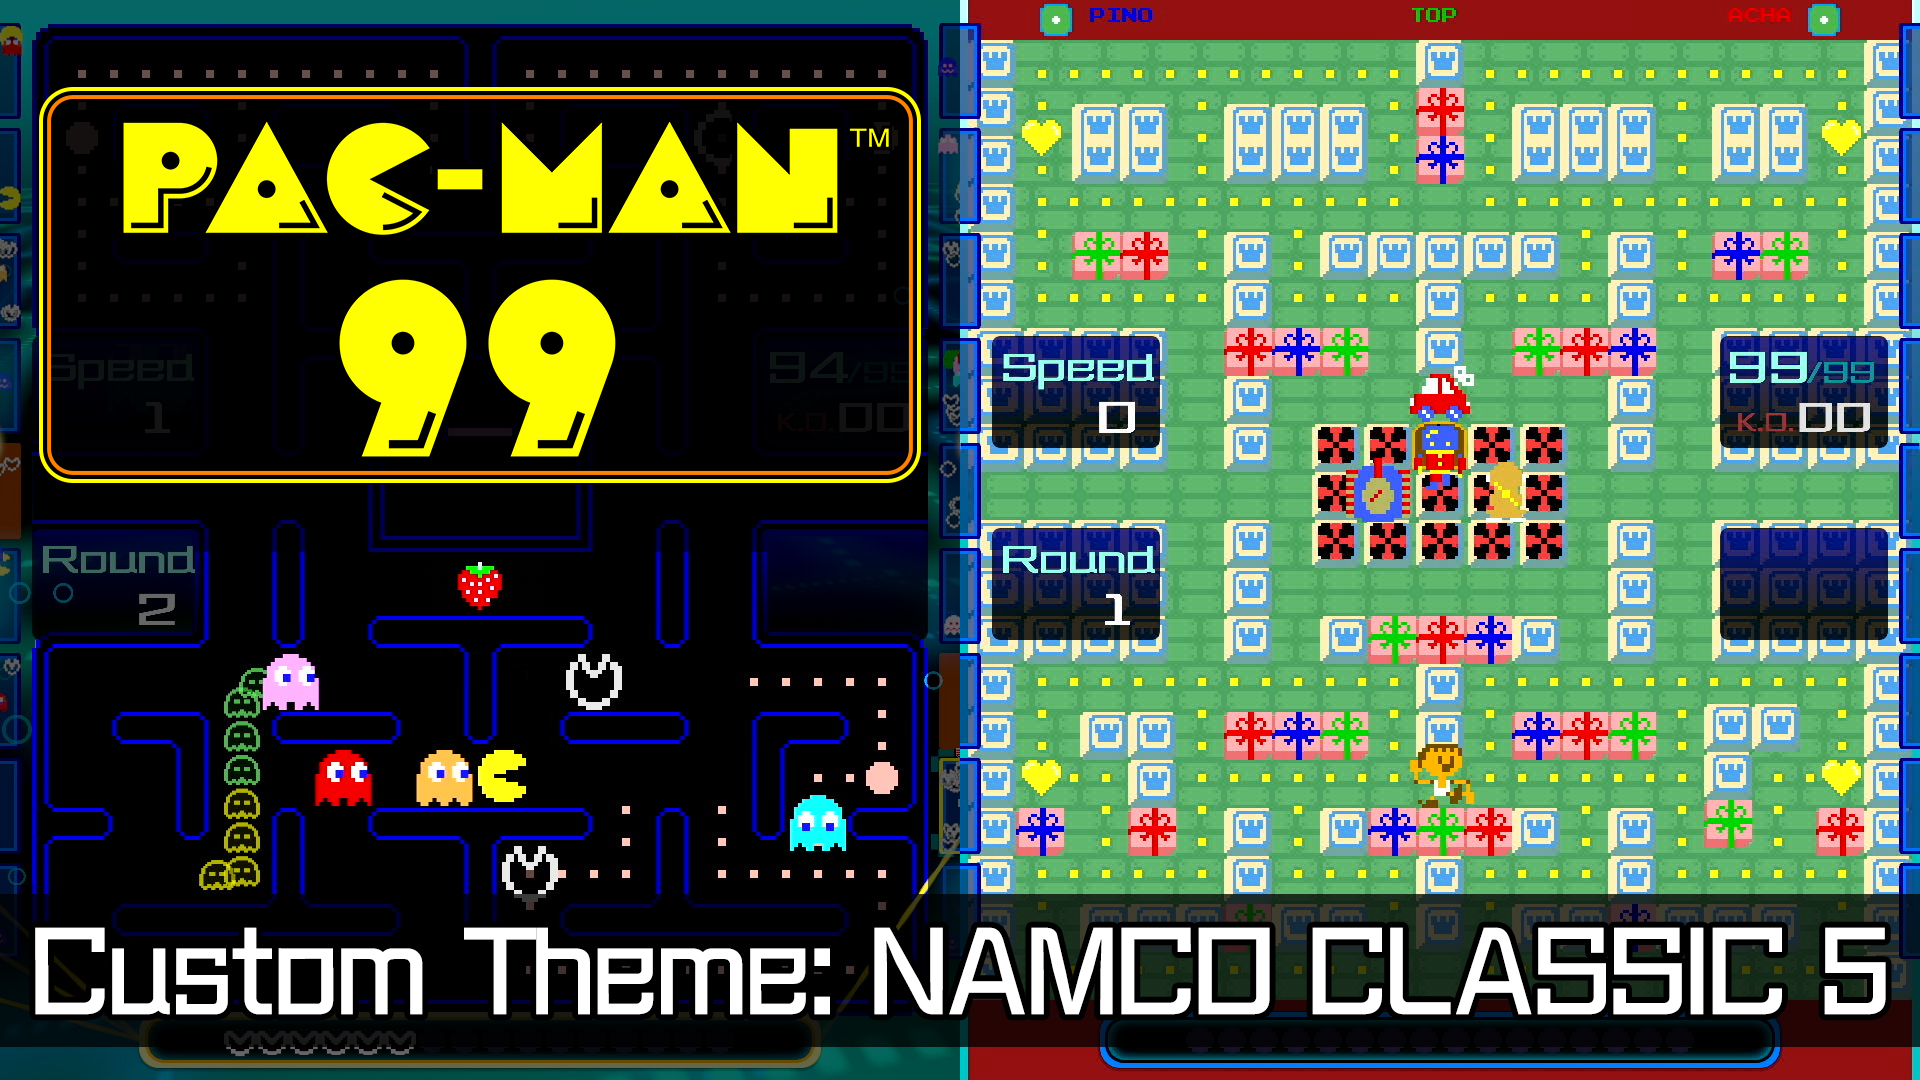 PAC-MAN 99 Custom Theme: NAMCO CLASSIC 5